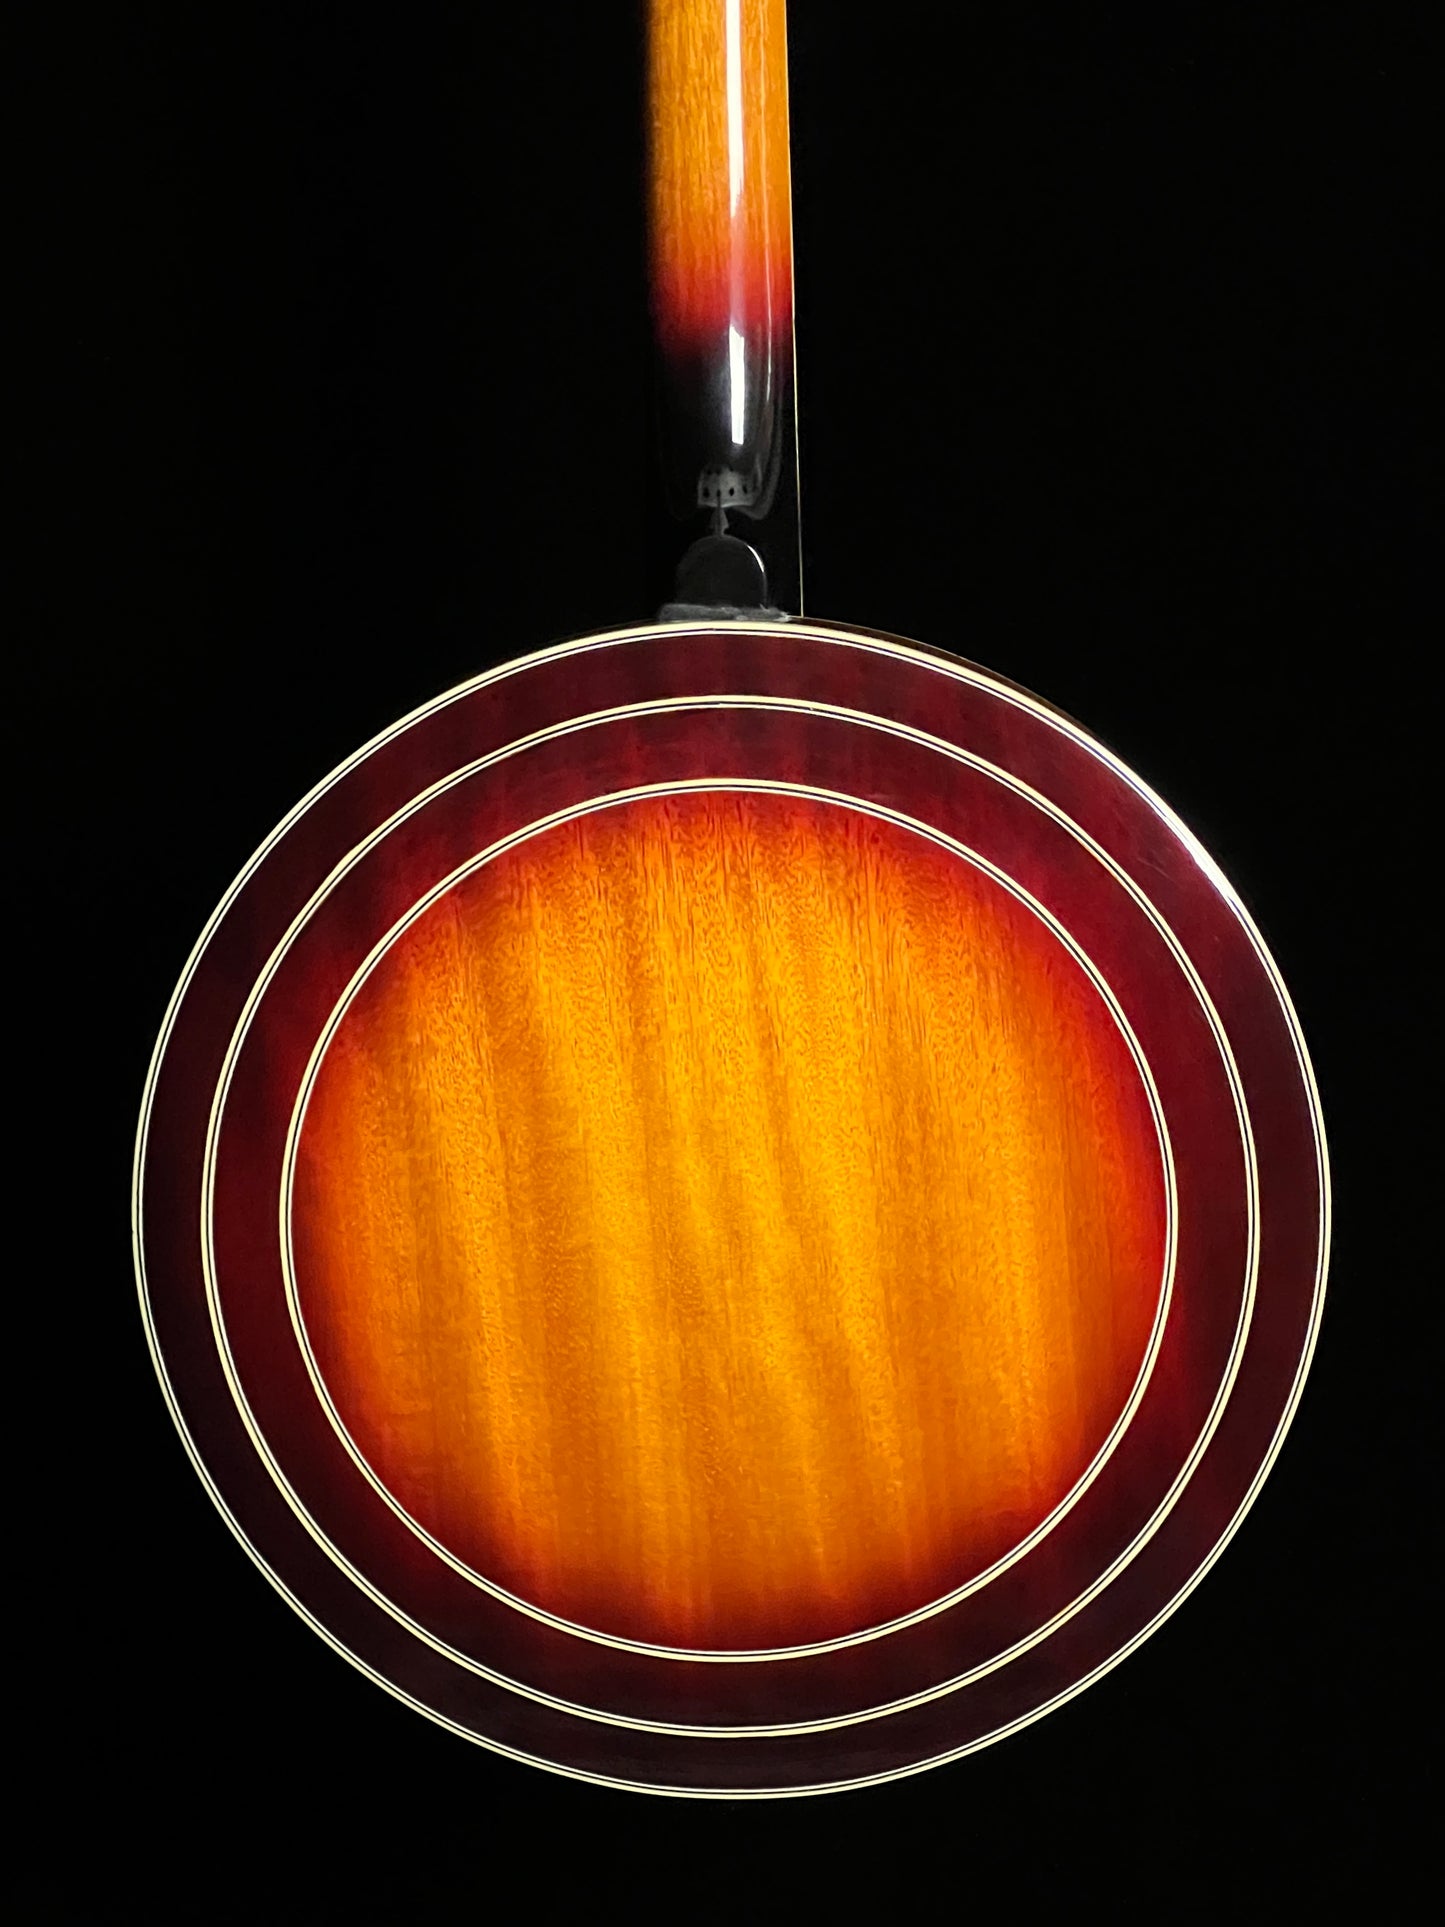 Mastertone Gold Tone OB-2 Bowtie 5-String Banjo with Resonator